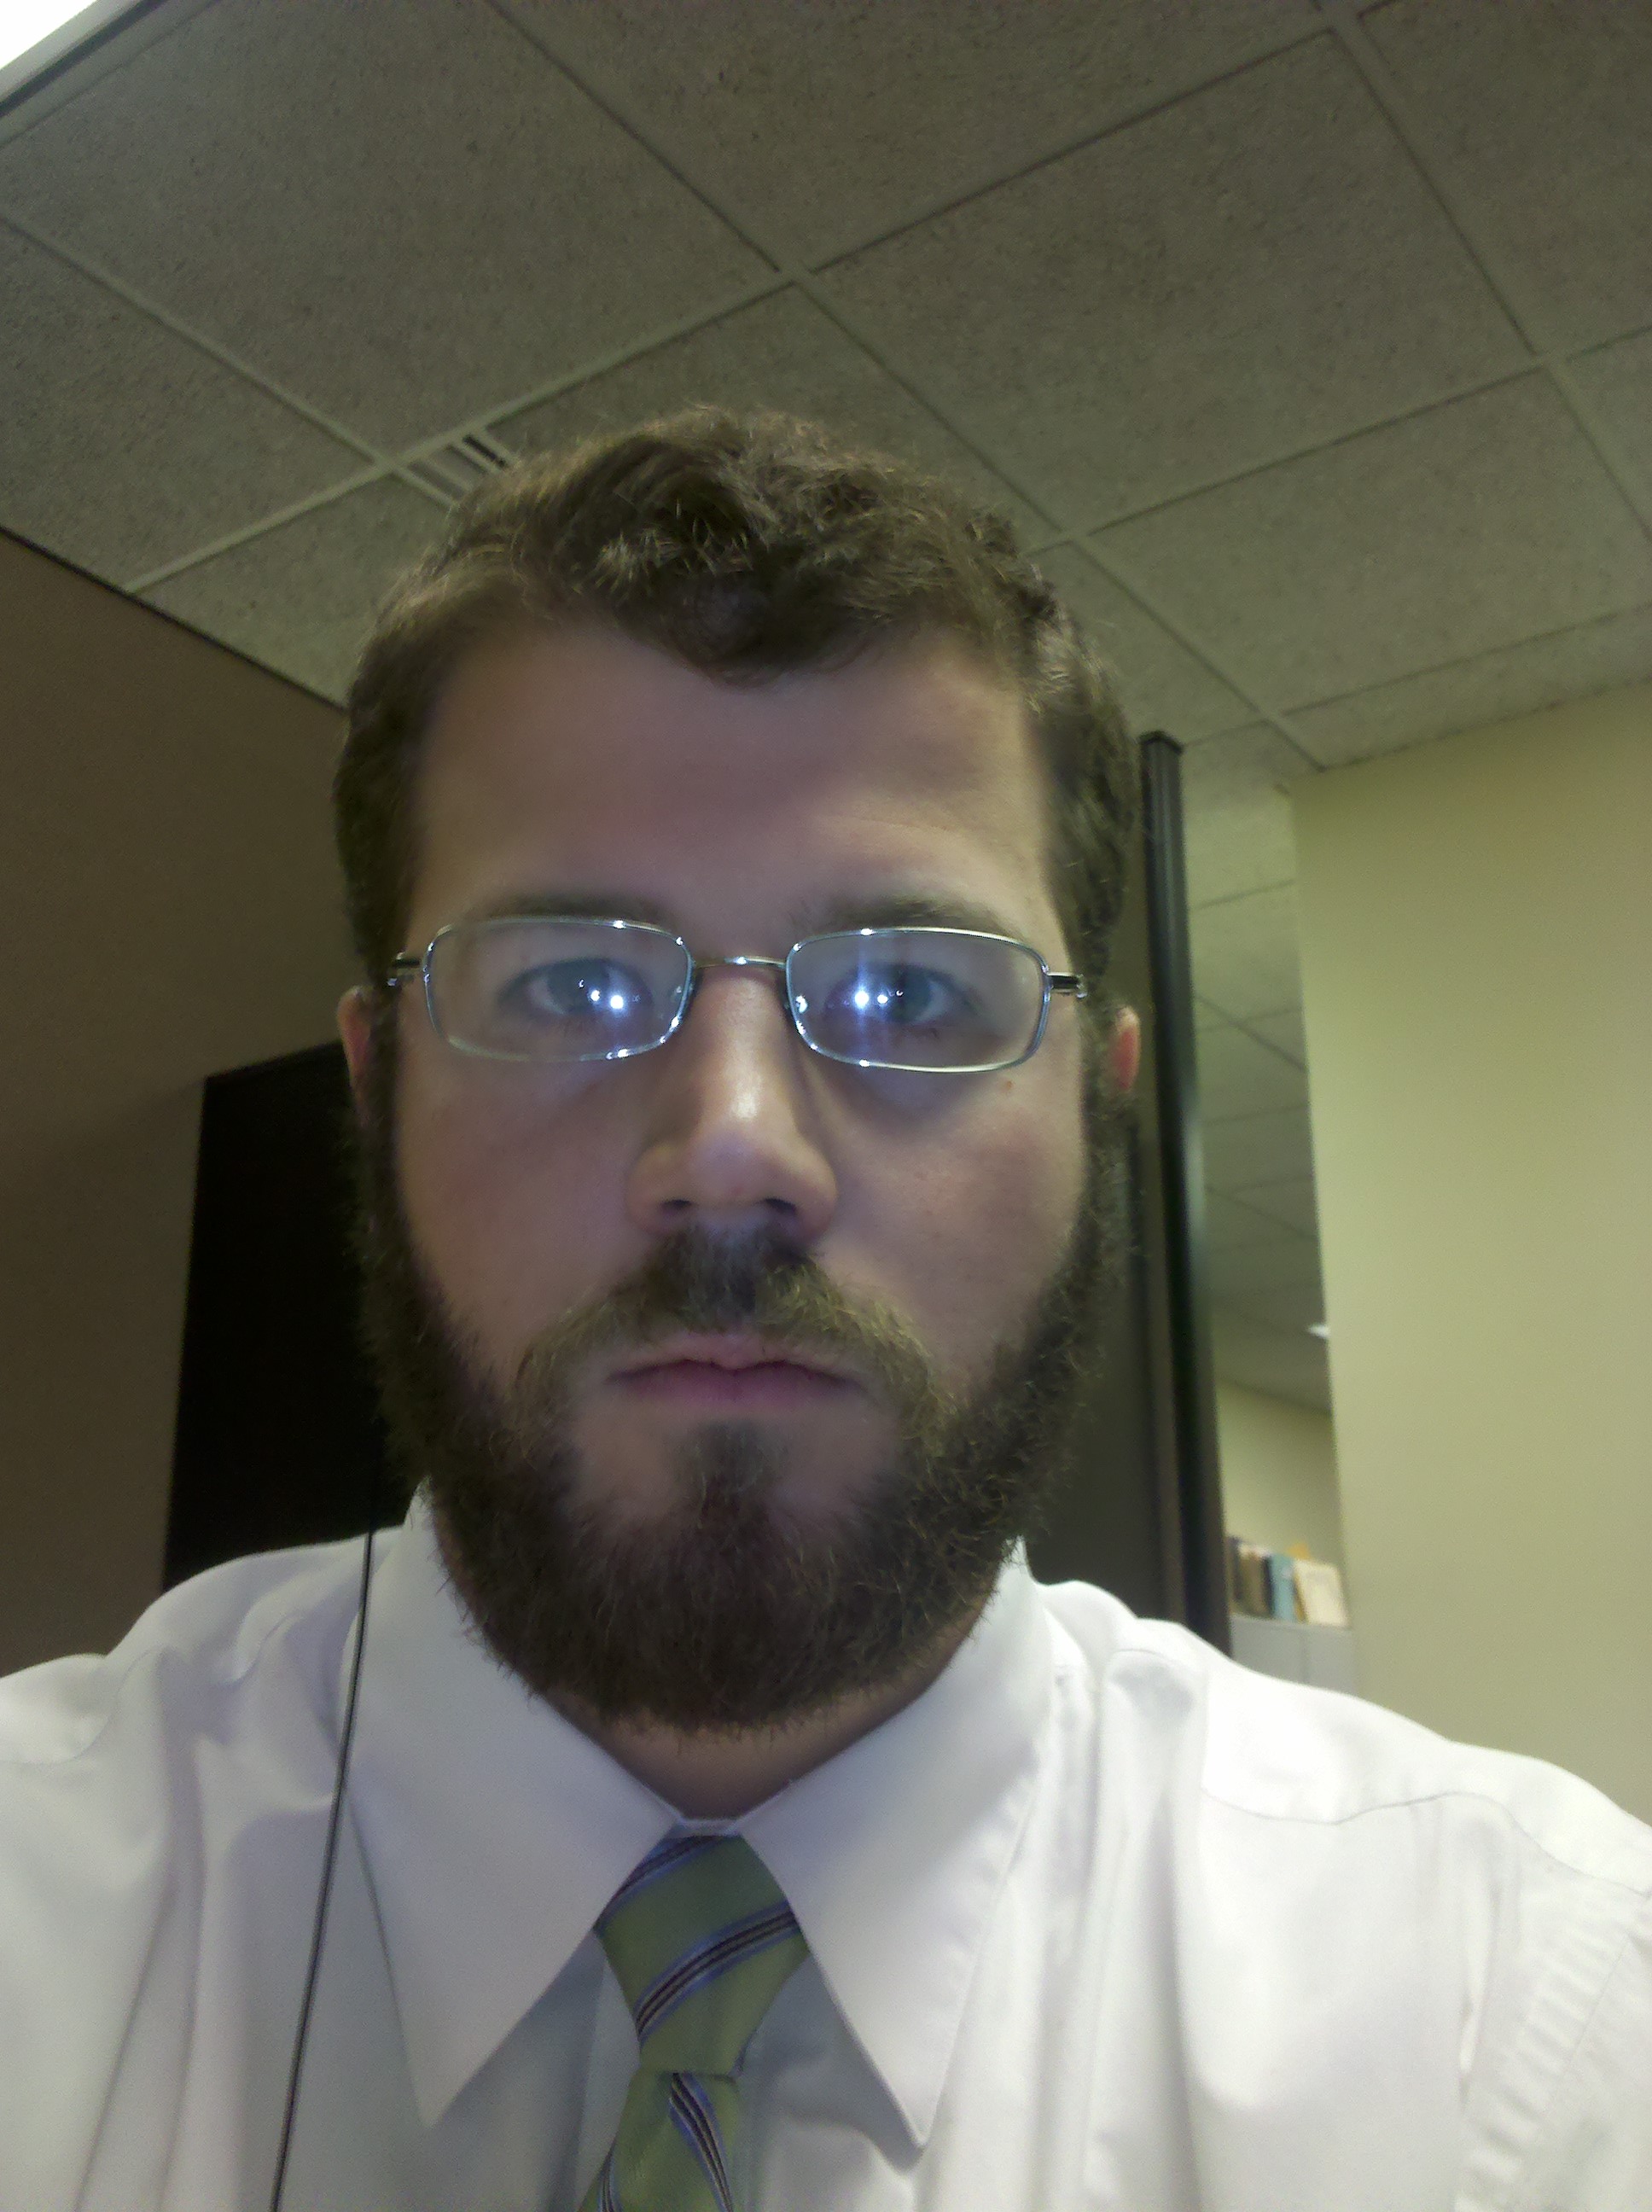 #16 - Craig pulling the beard off at work - IMG_20101206_170033